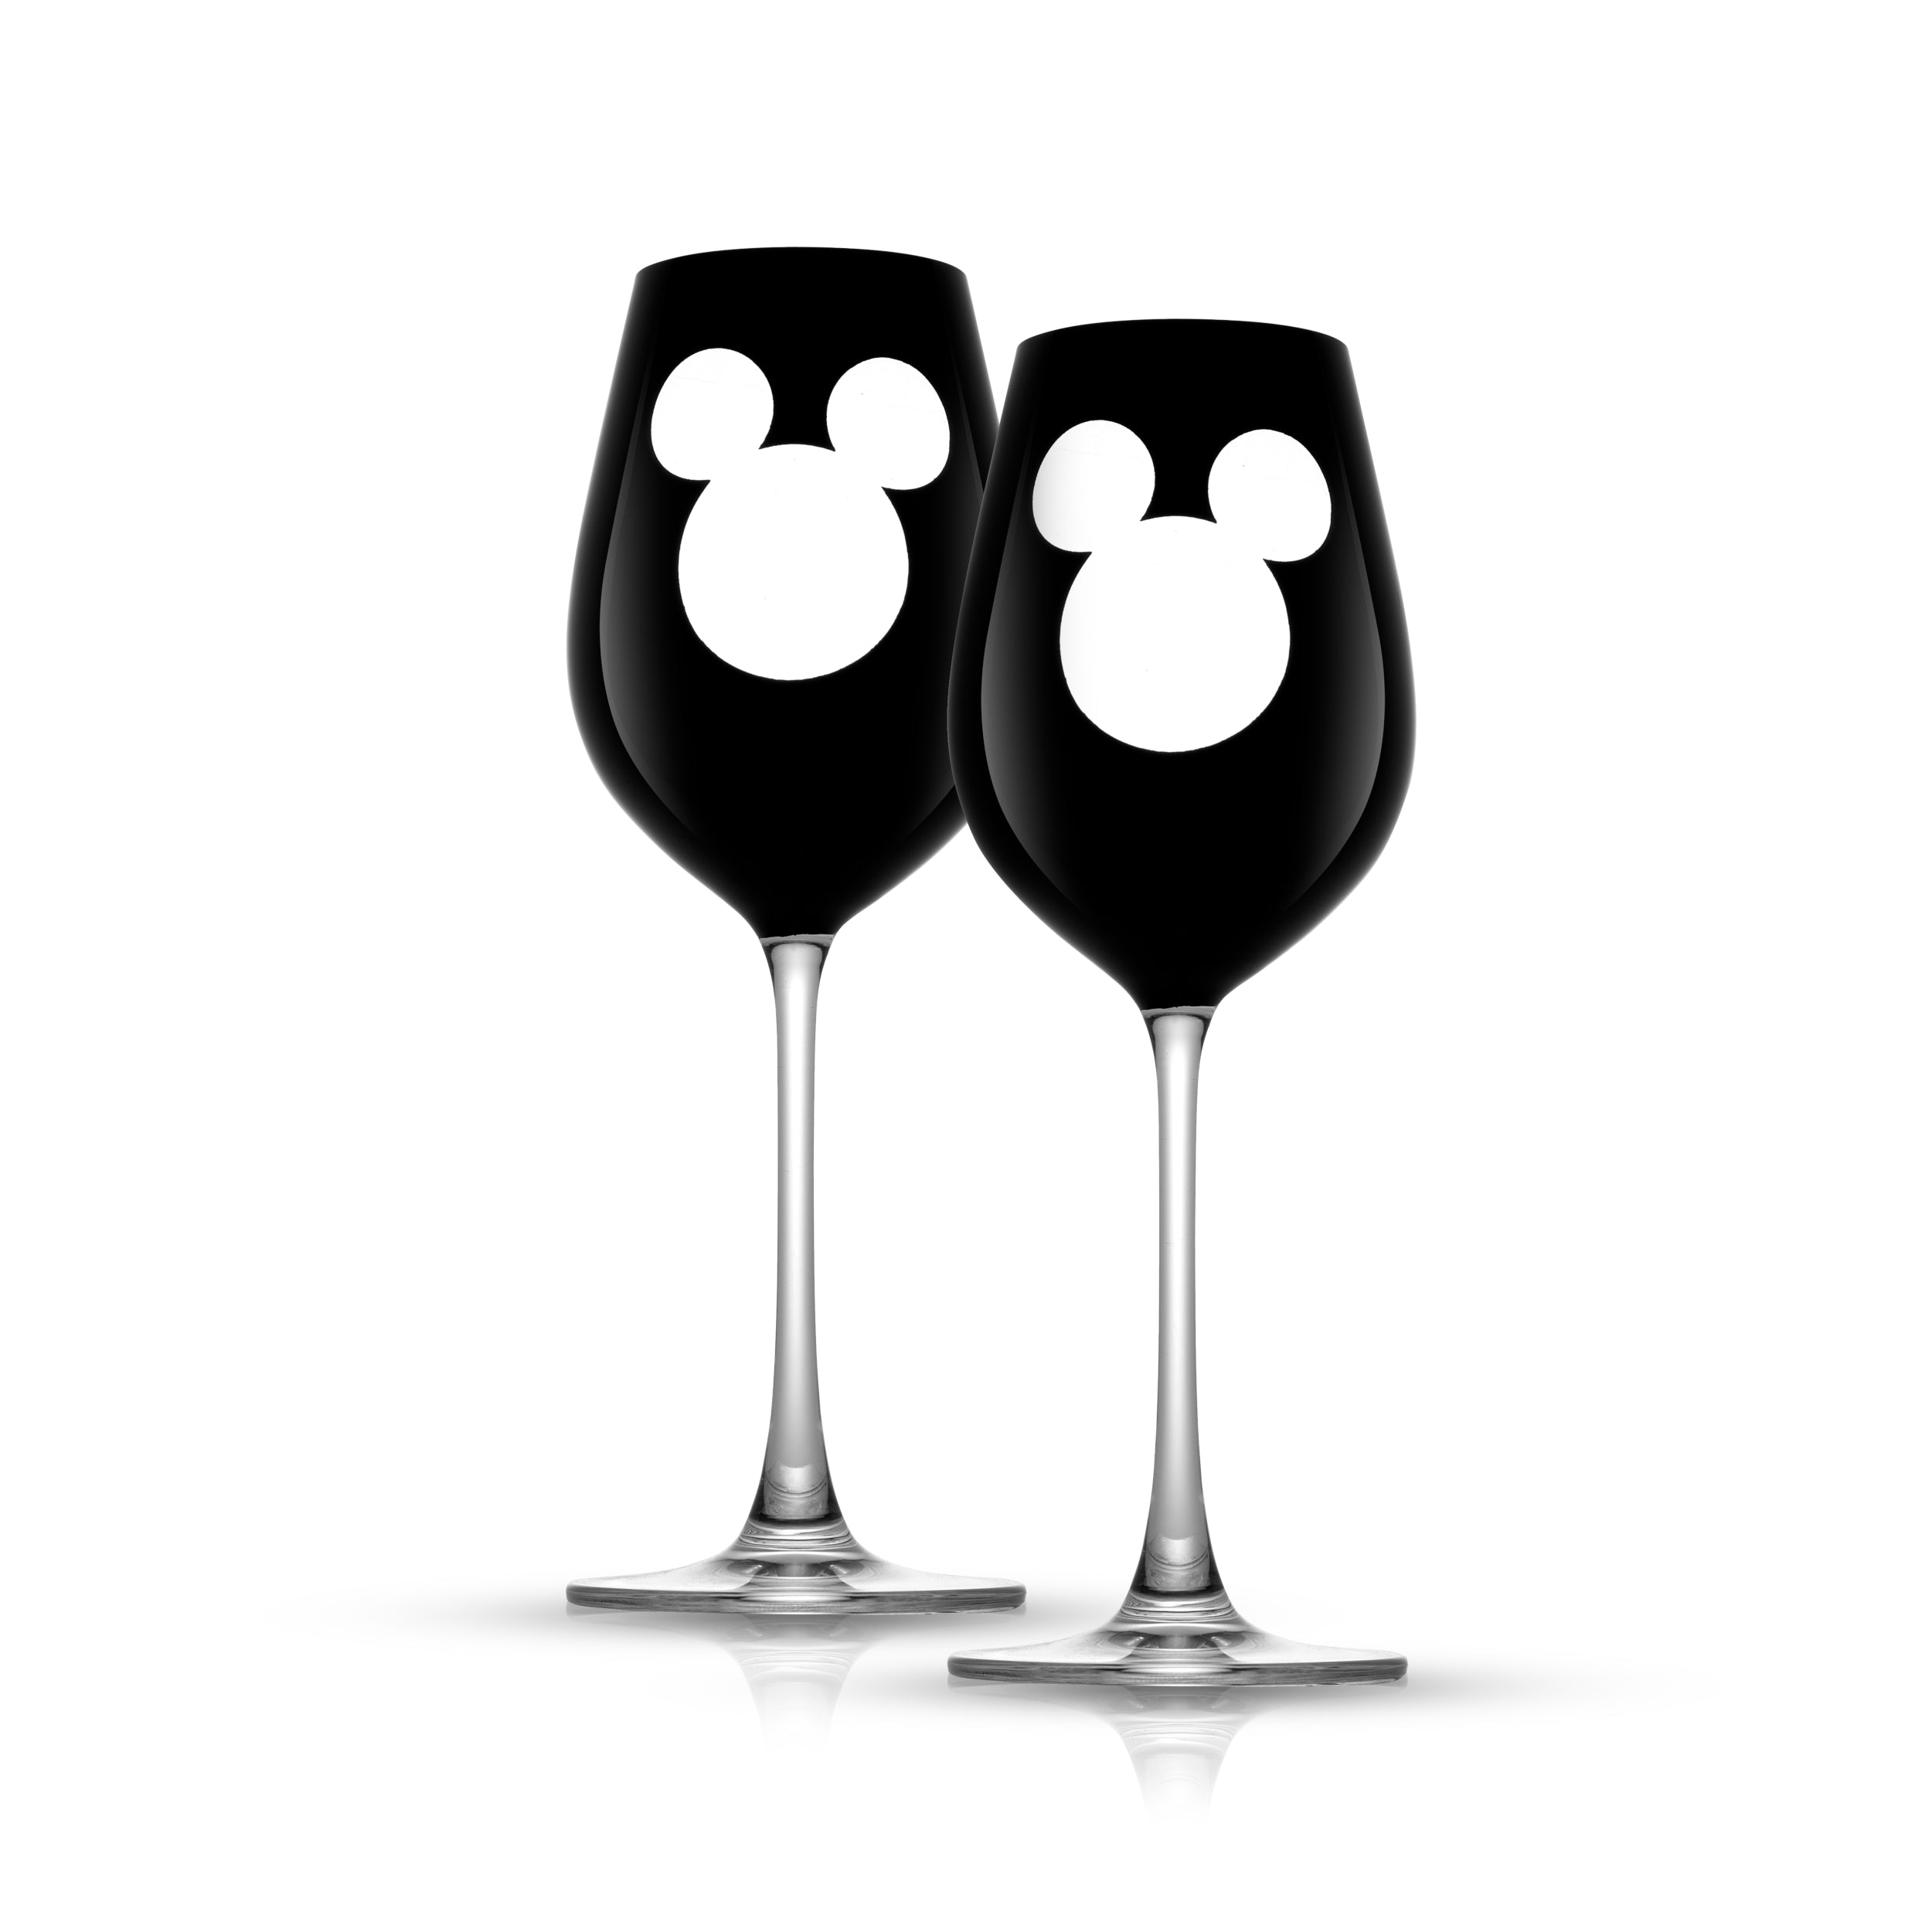 Disney Luxury Mickey Mouse Crystal Stemmed White Glasses - 16 oz - Set of 2